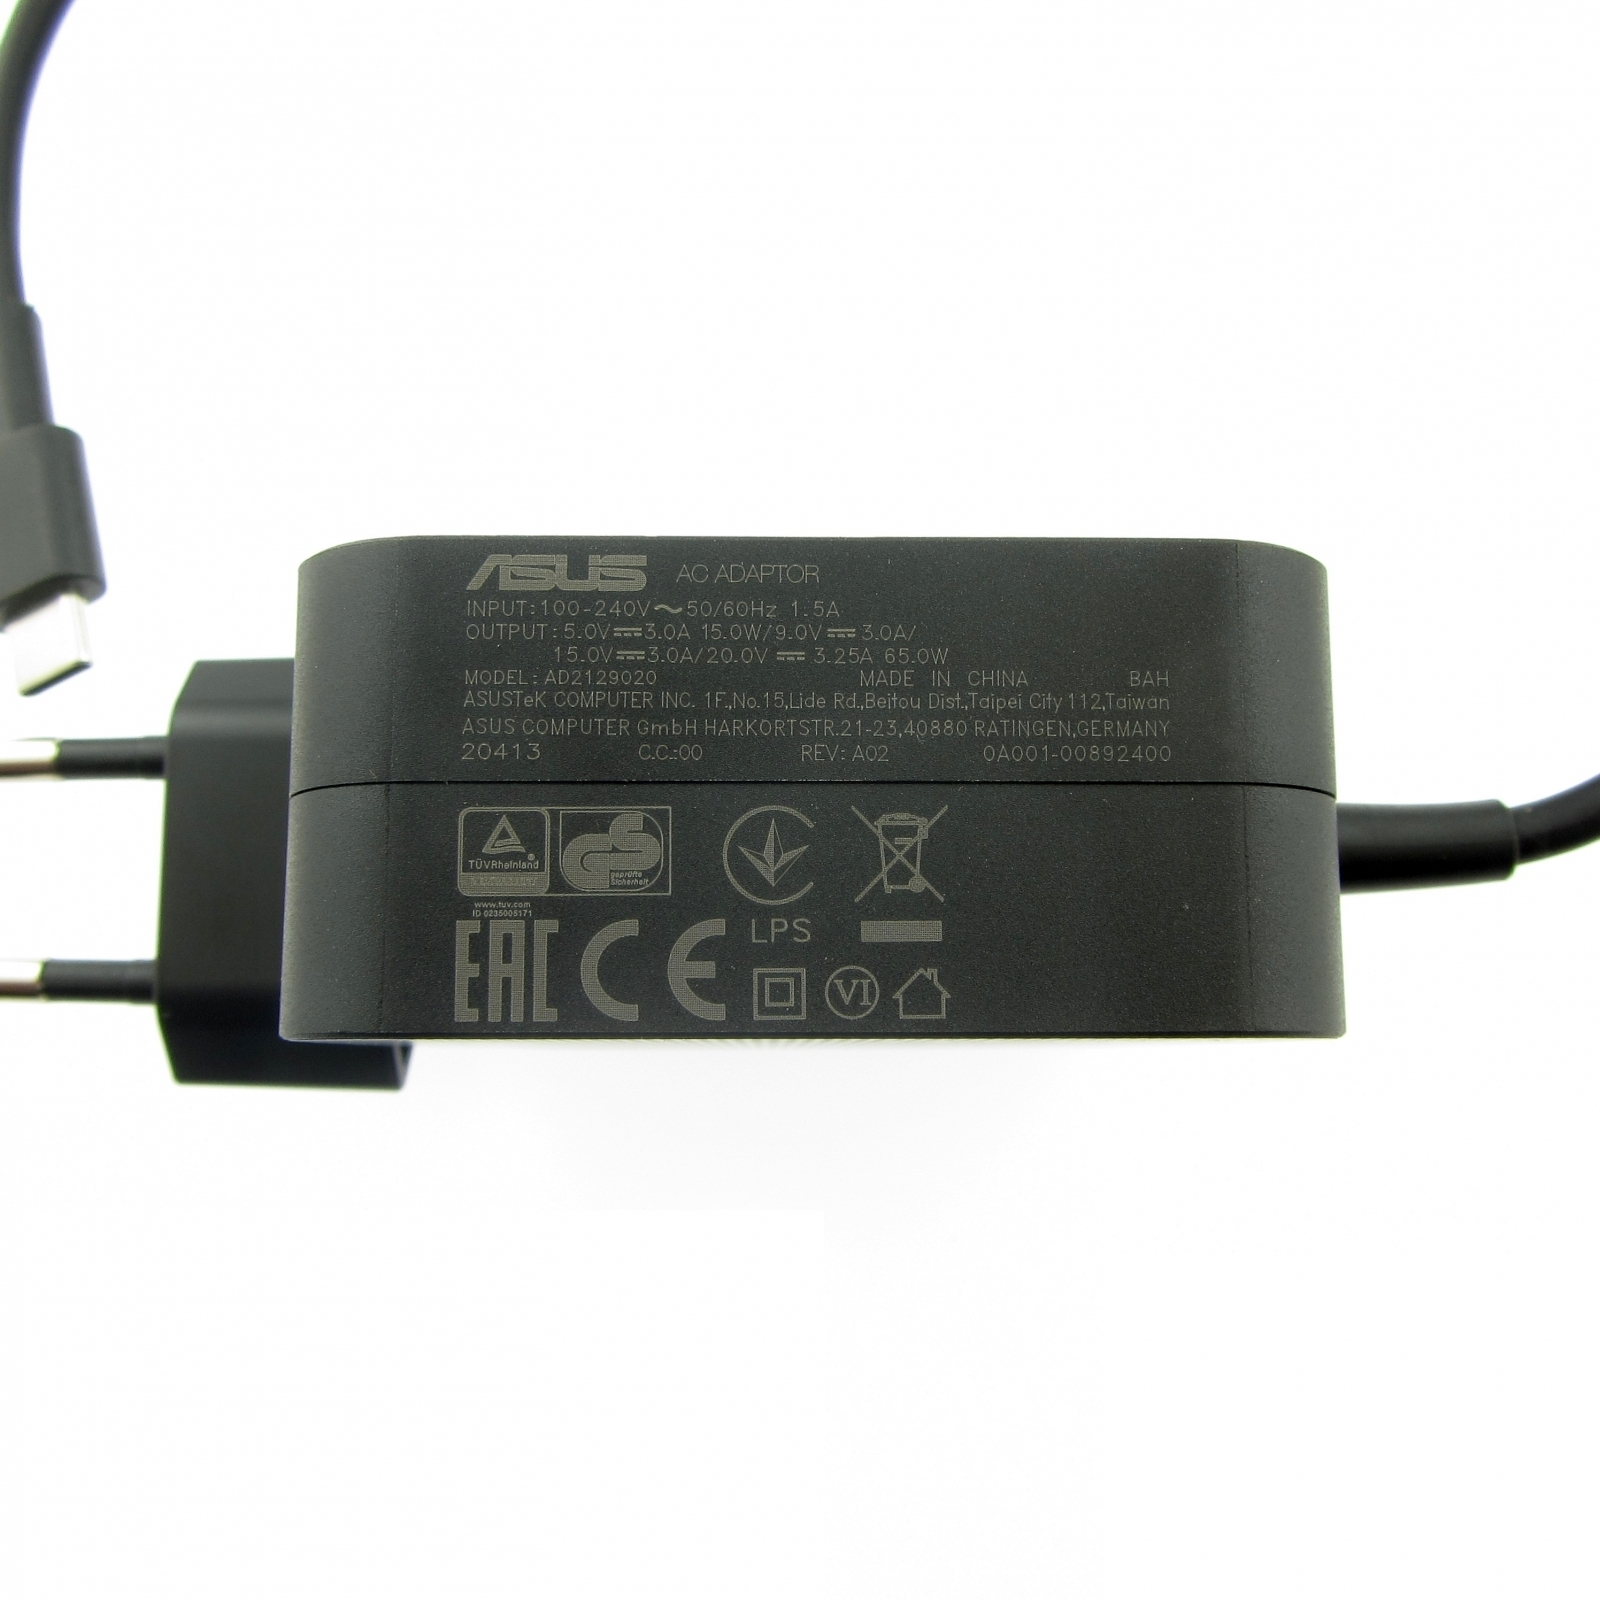 ASUS 0A001-00892400 Original 65 Wallplug EU Netzteil Watt USB-C